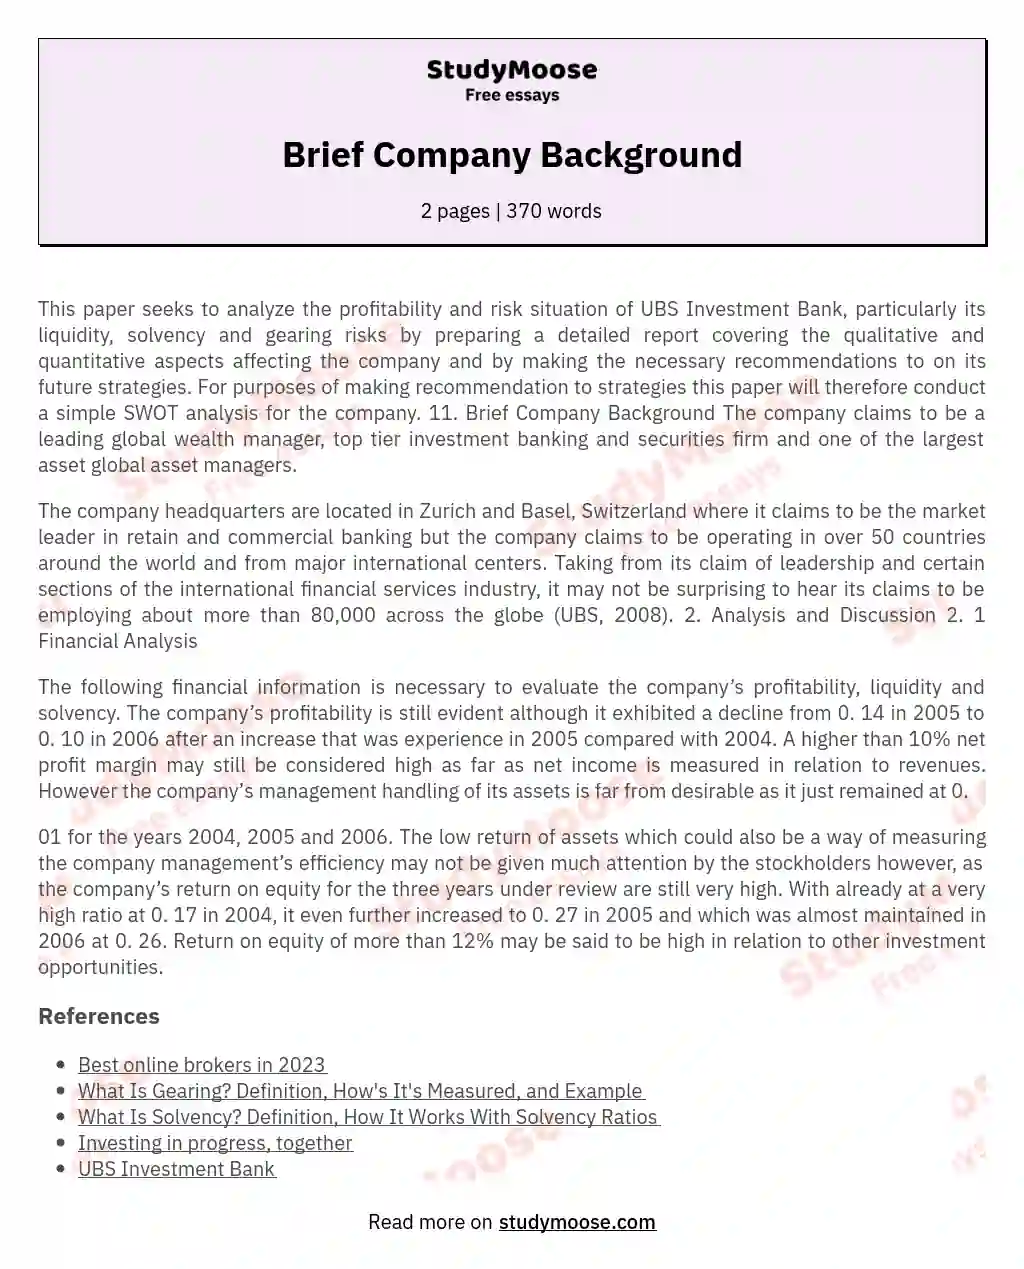 Brief Company Background Free Essay Example